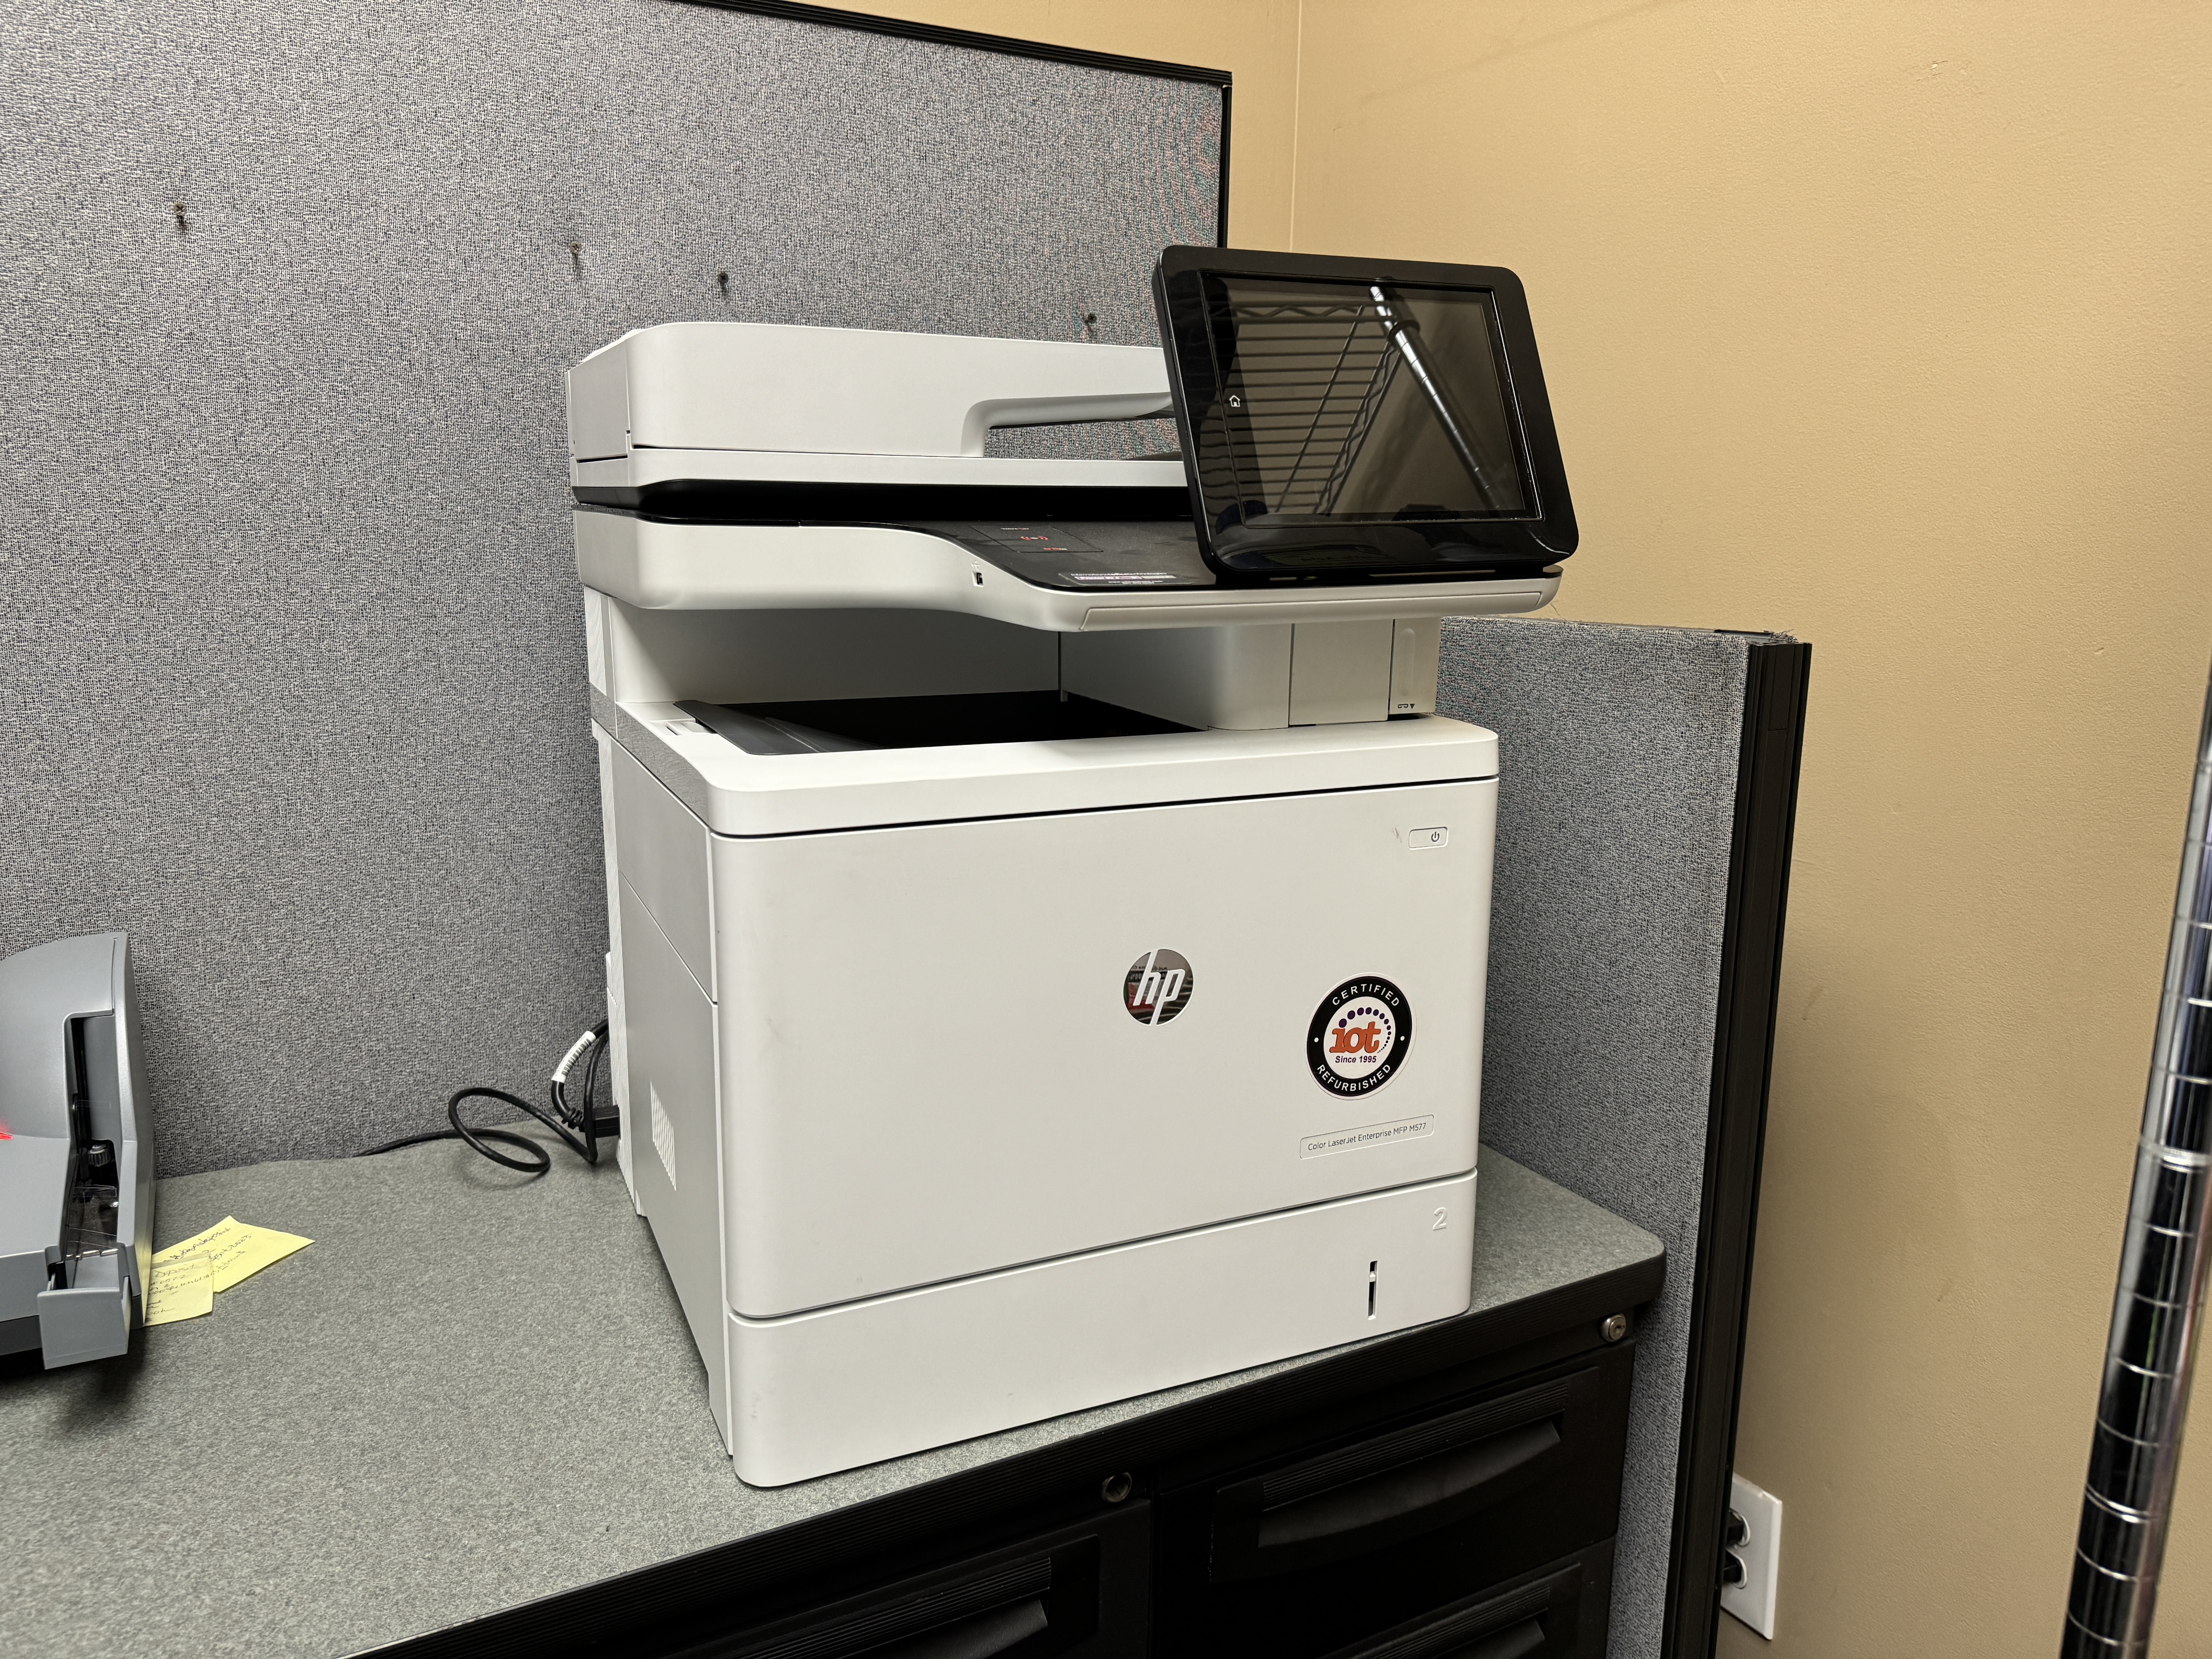 HP M577 Color printer. 